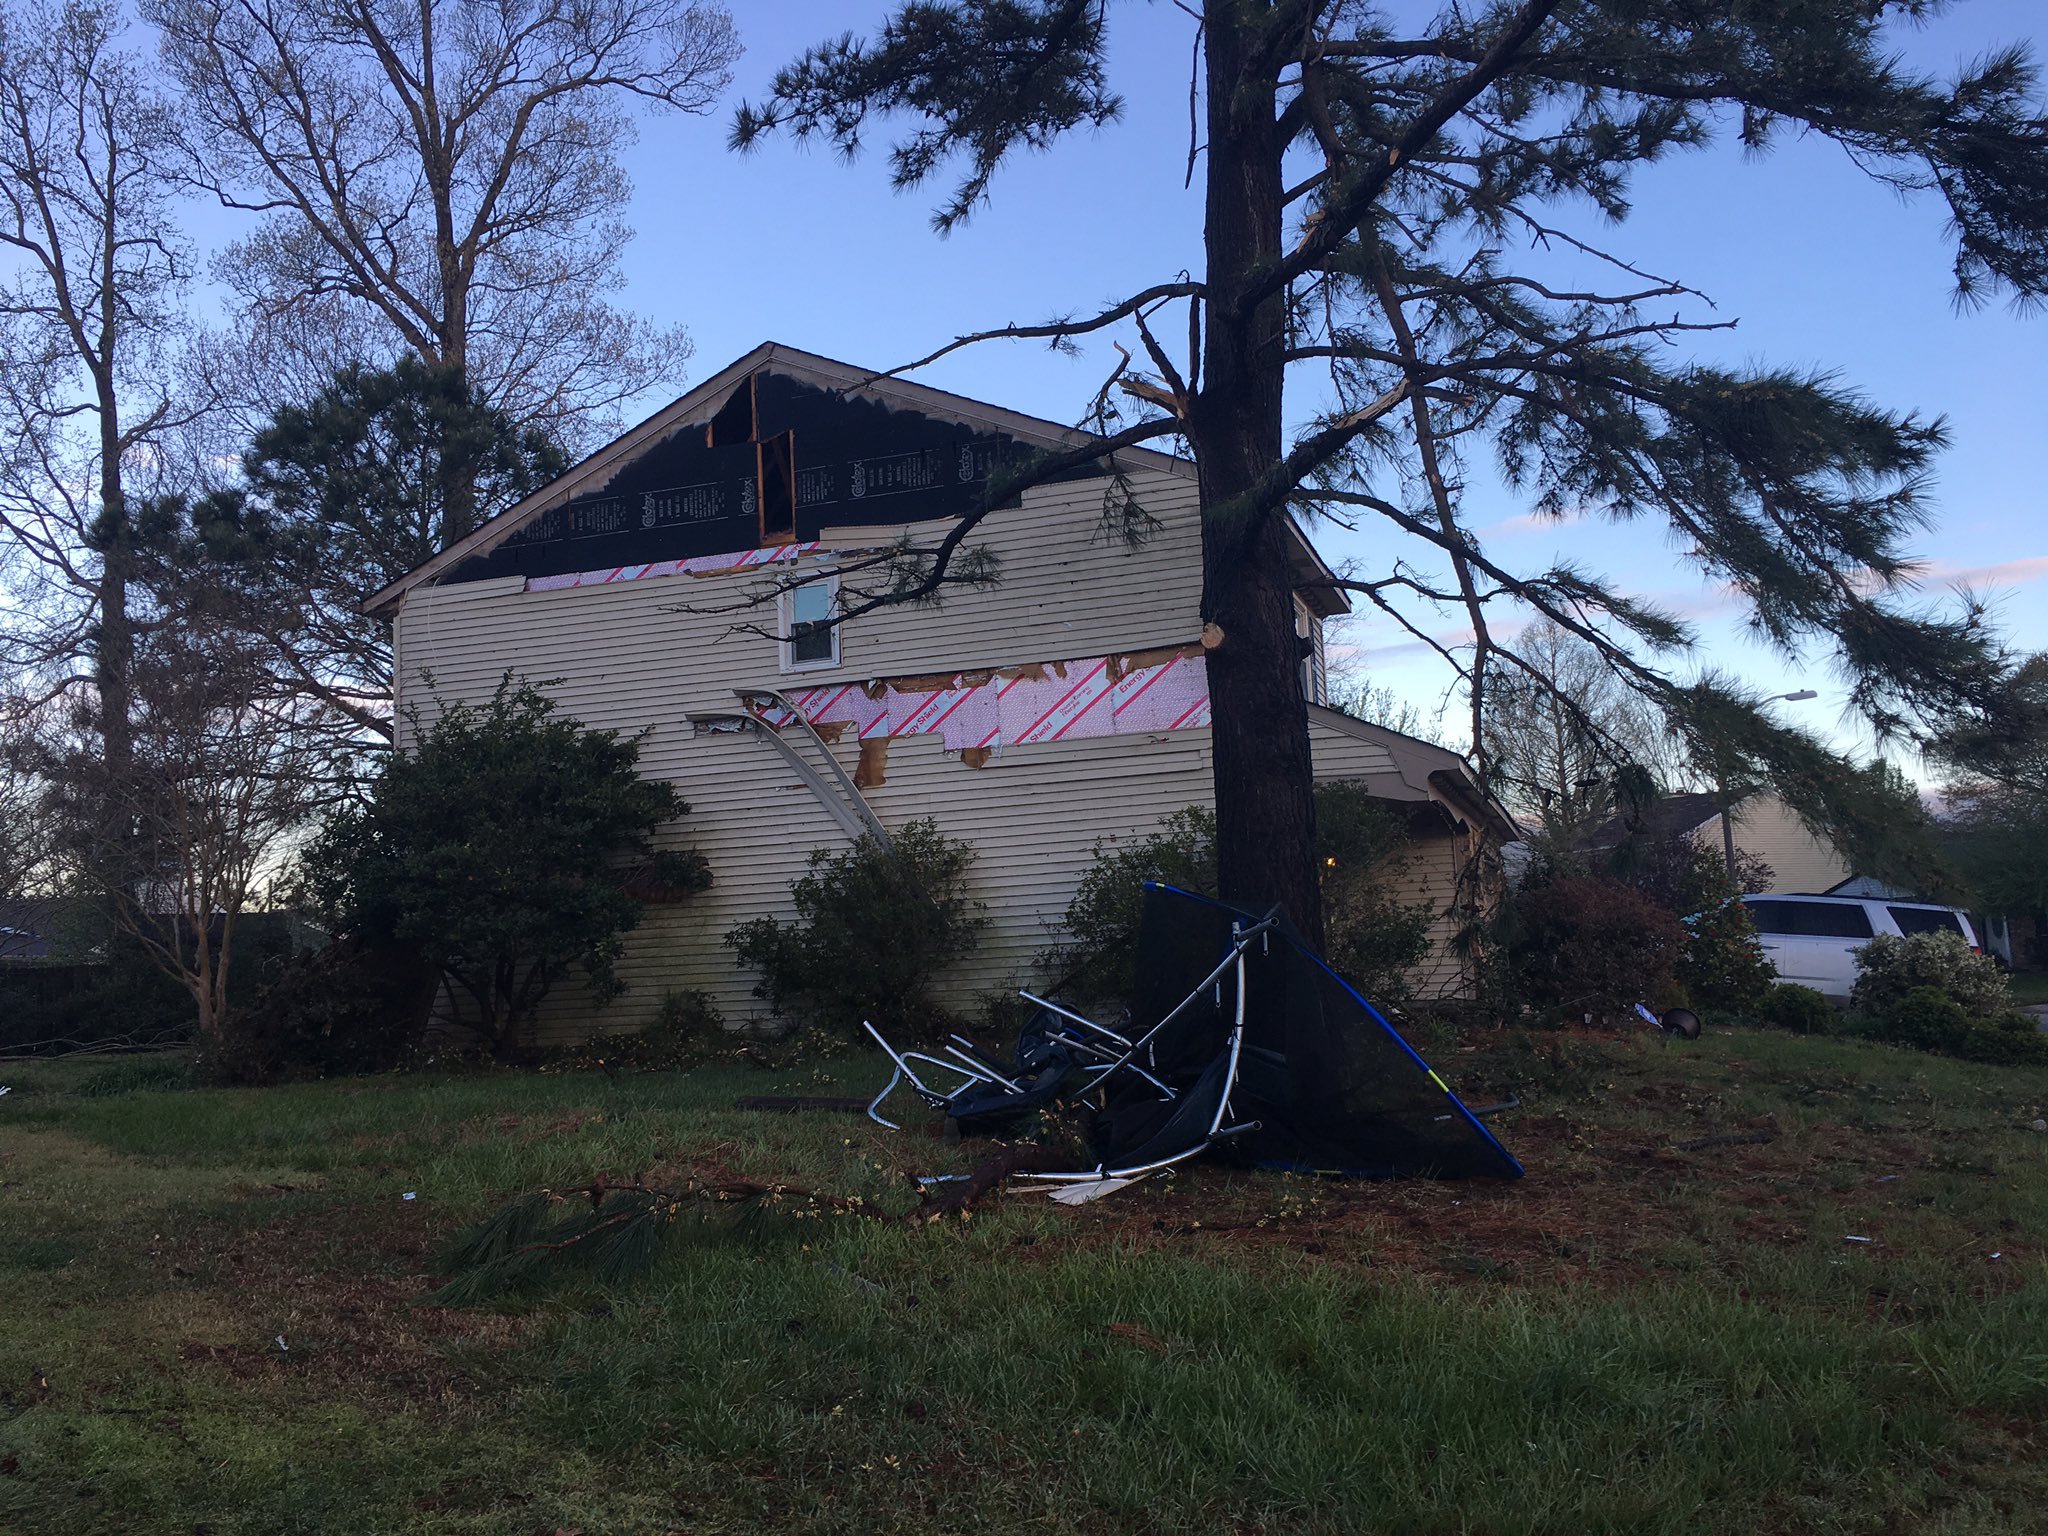 wfaa.com | Three tornadoes confirmed; EF-2 hit Chesapeake church